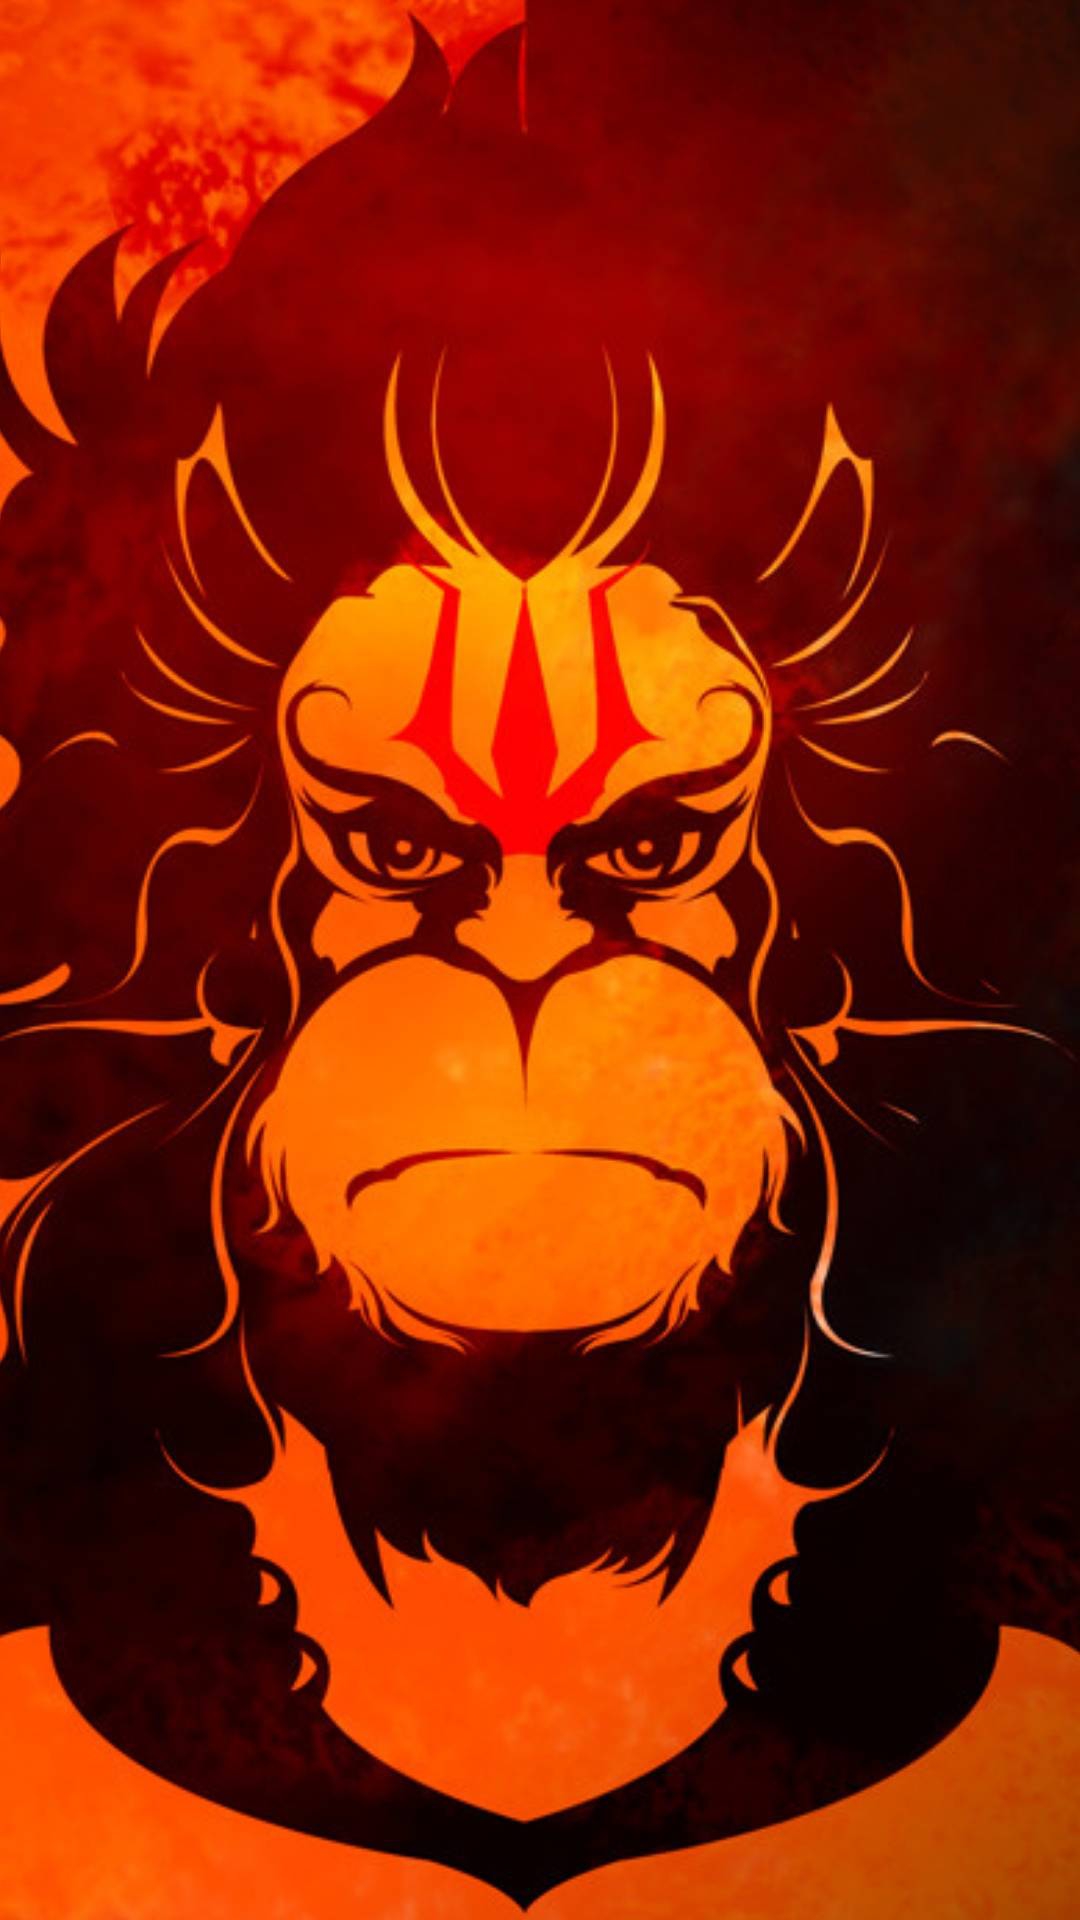 Lord Hanuman IPhone Wallpaper - IPhone Wallpapers : iPhone Wallpapers